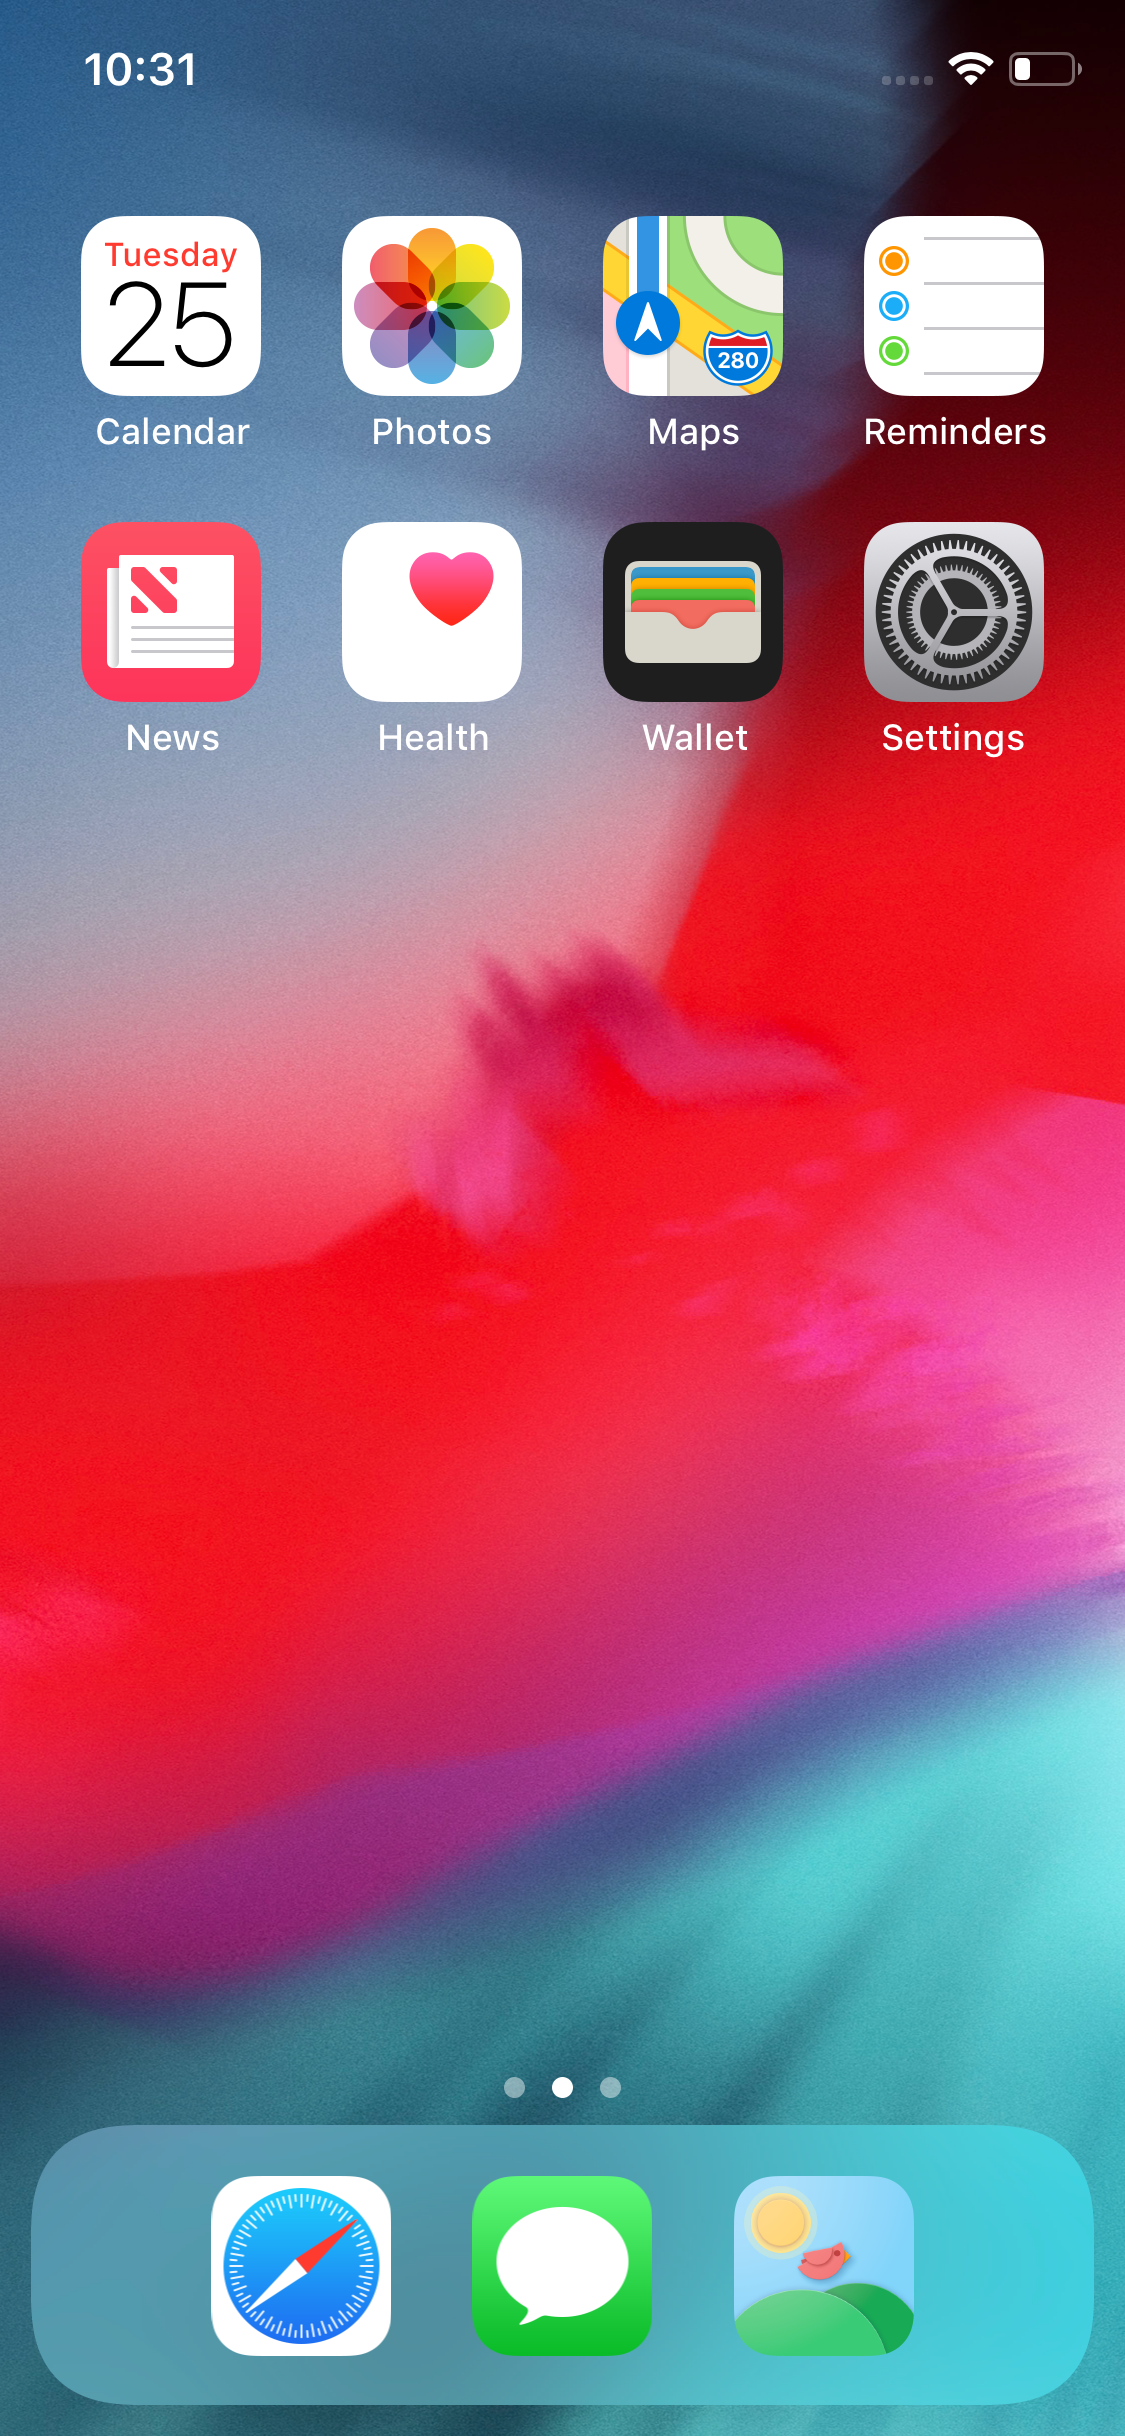 Birb logo on iOS home screen